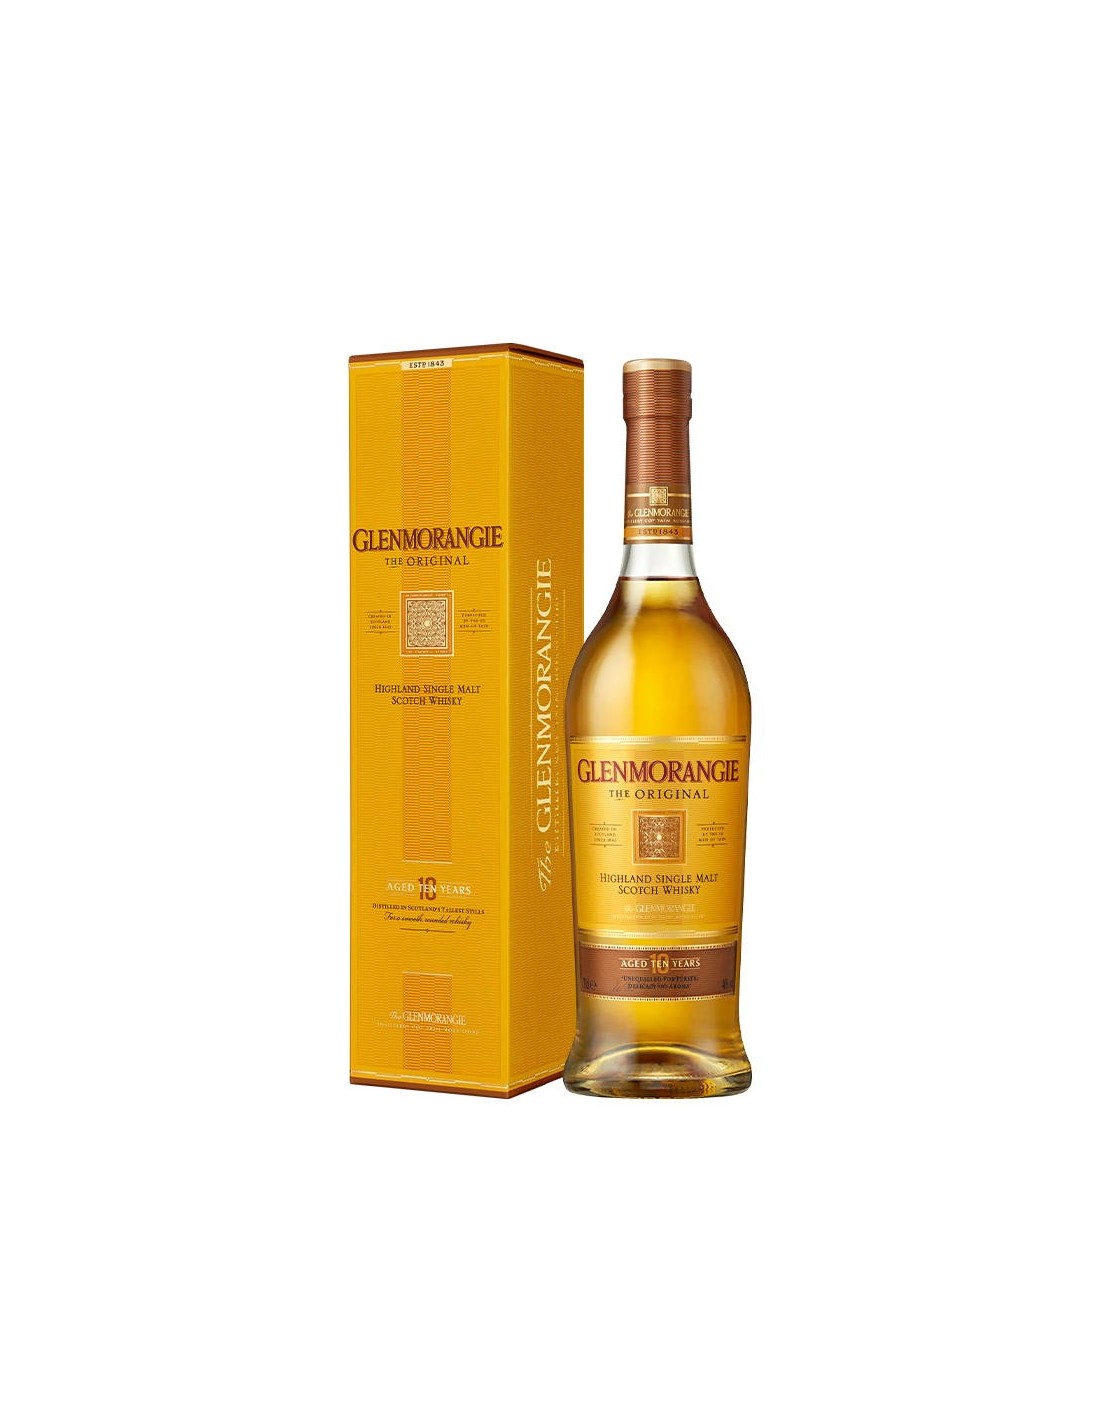 Whisky Glenmorangie The Original, 10 ani, 0.7L, 40% alc., Scotia alcooldiscount.ro